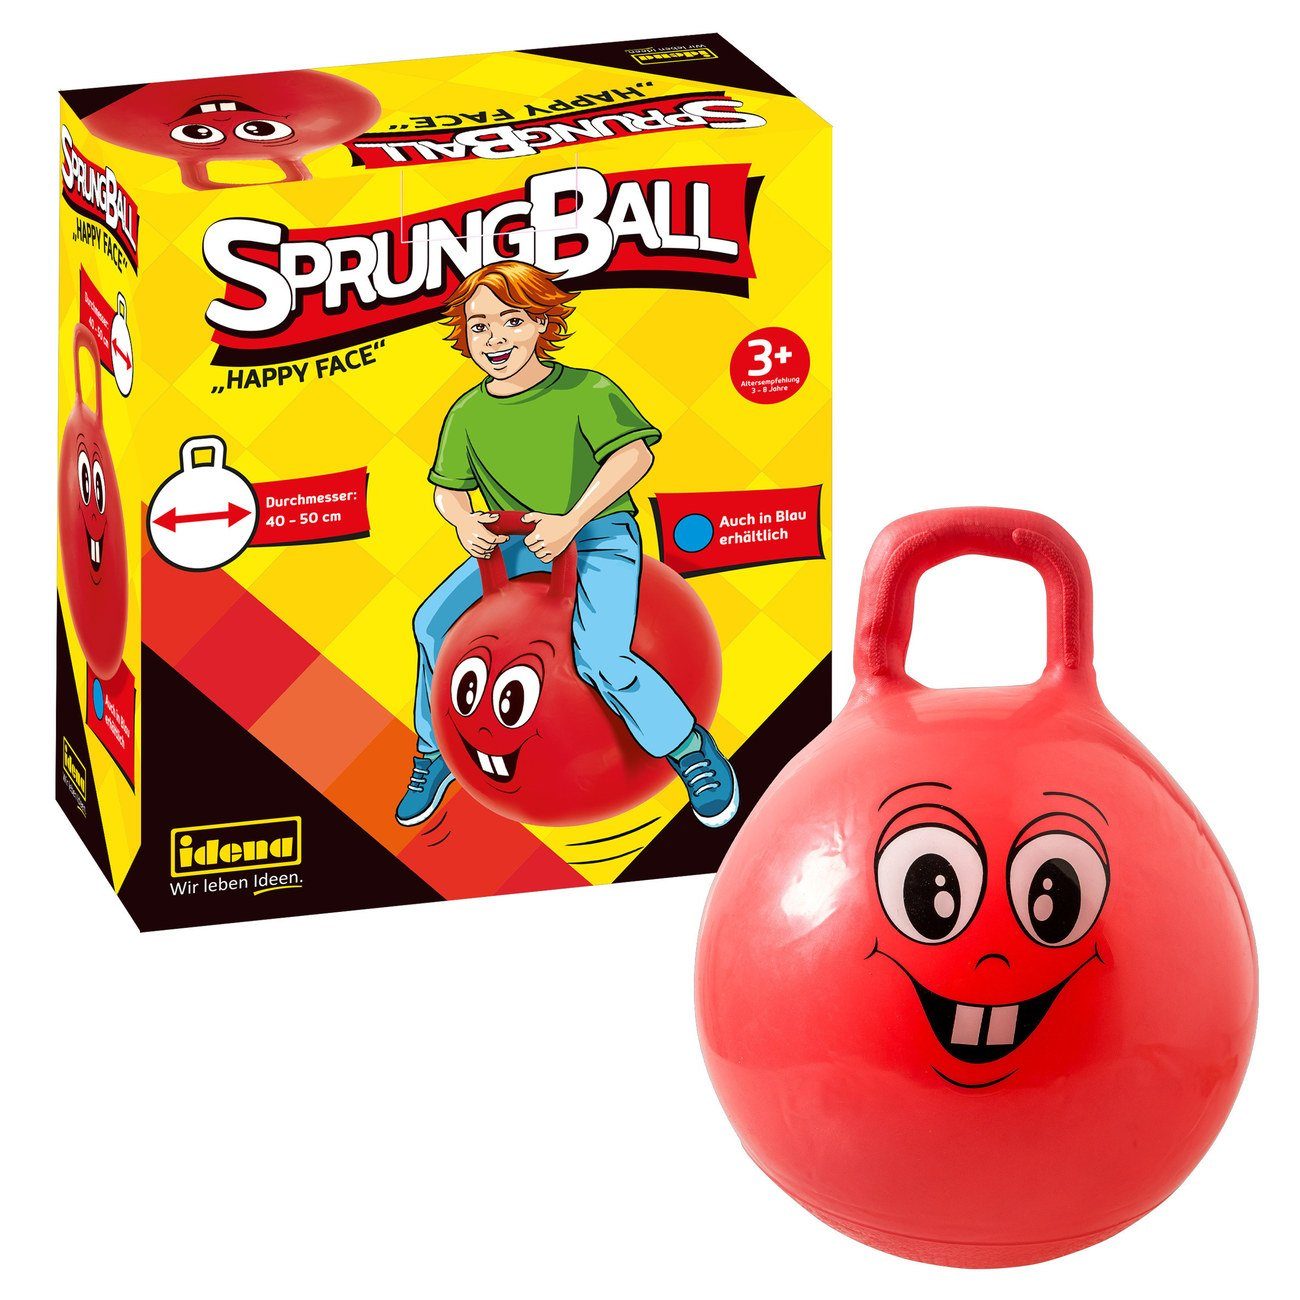 Idena Hüpfball Idena Sprungball "Happy Face" rot ø 40 cm - 50 cm Hüpfball, Springball | Hüpfbälle